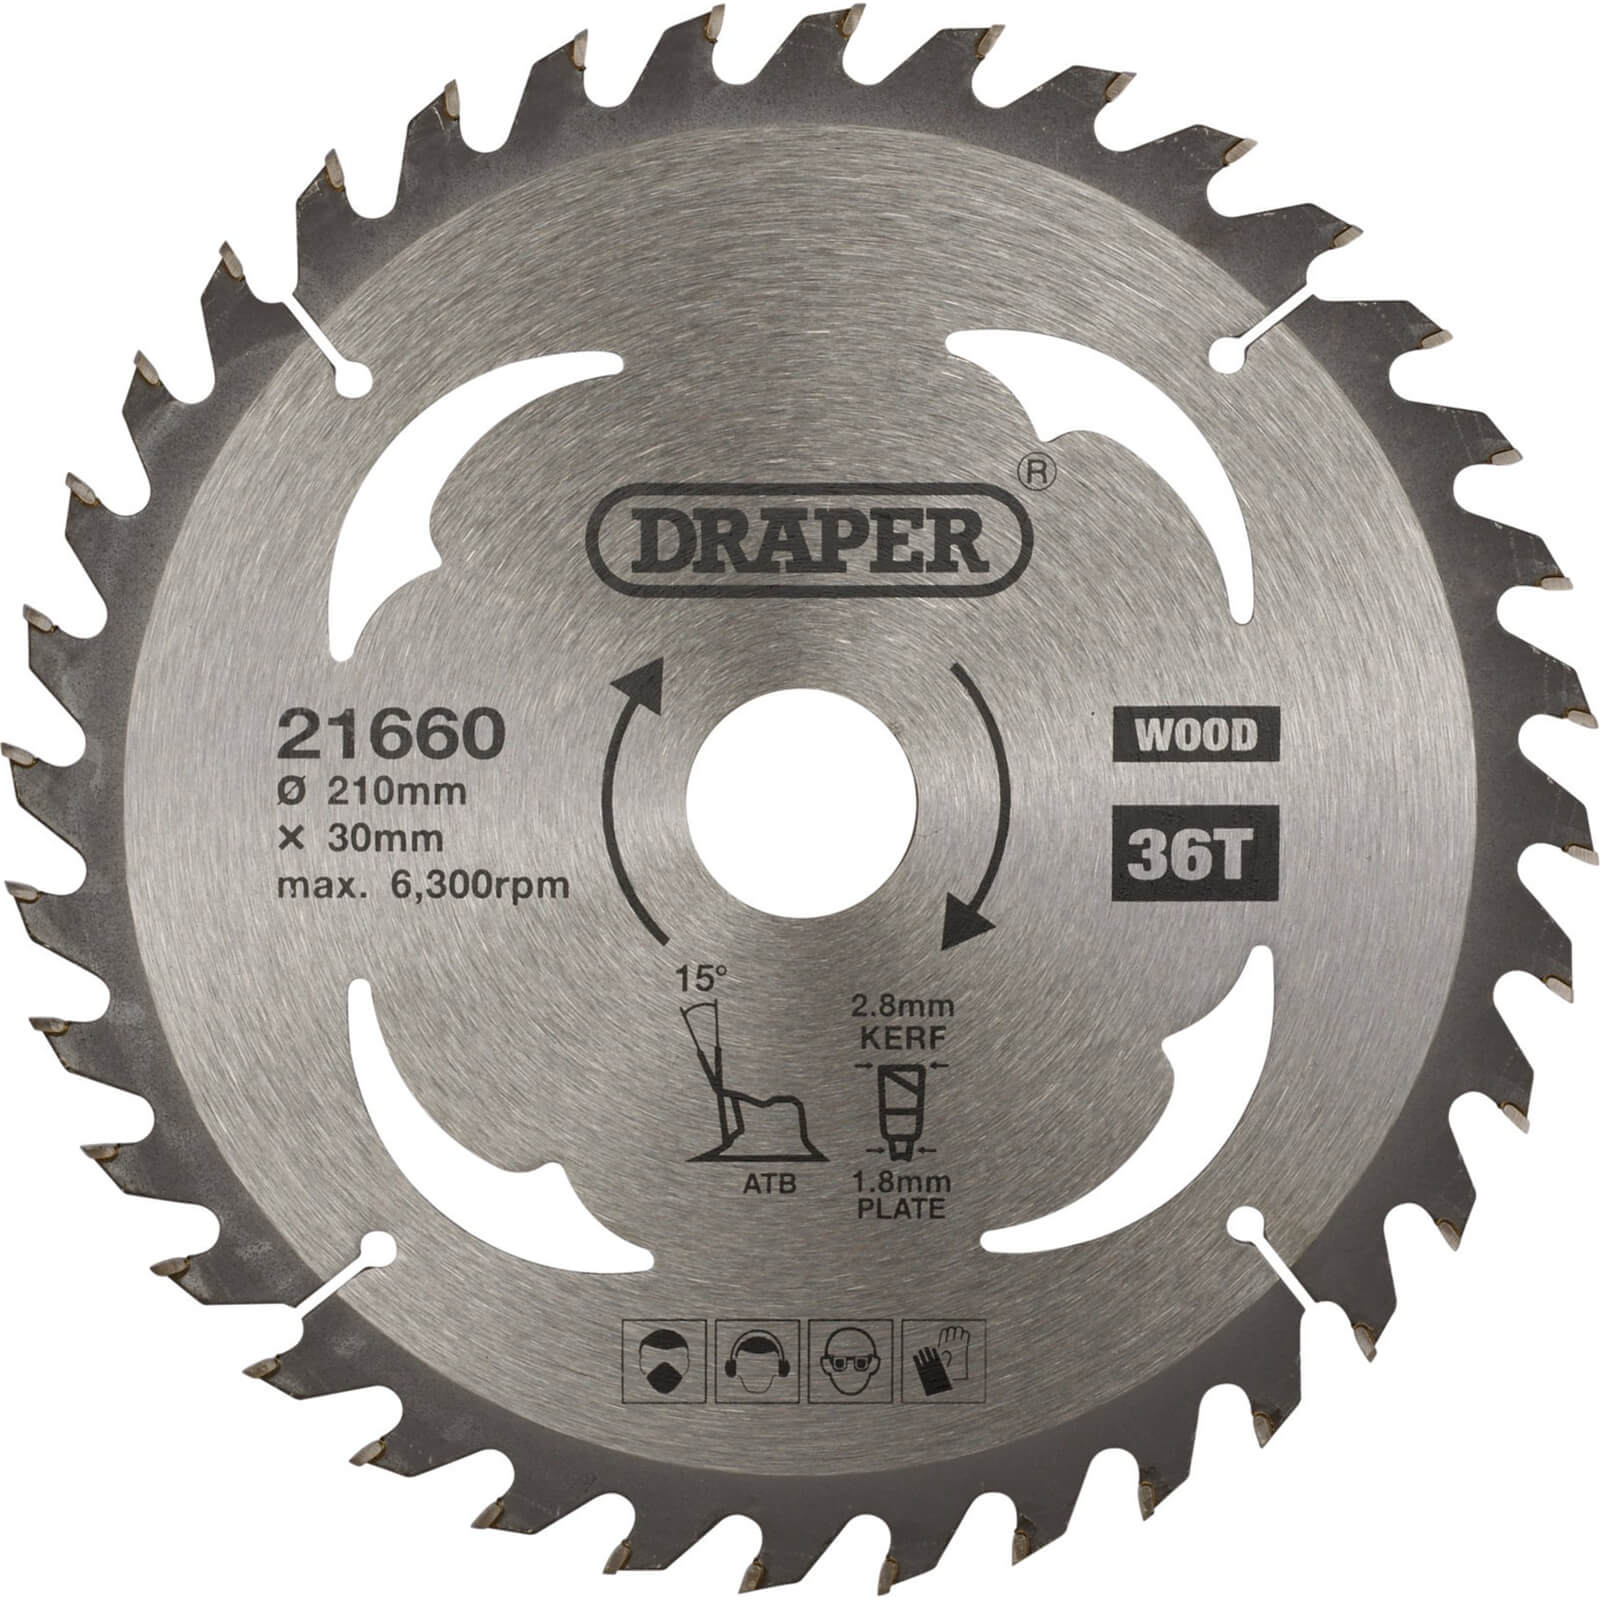 Image of Draper TCT Wood Cutting Circular Saw Blade 210mm 36T 30mm